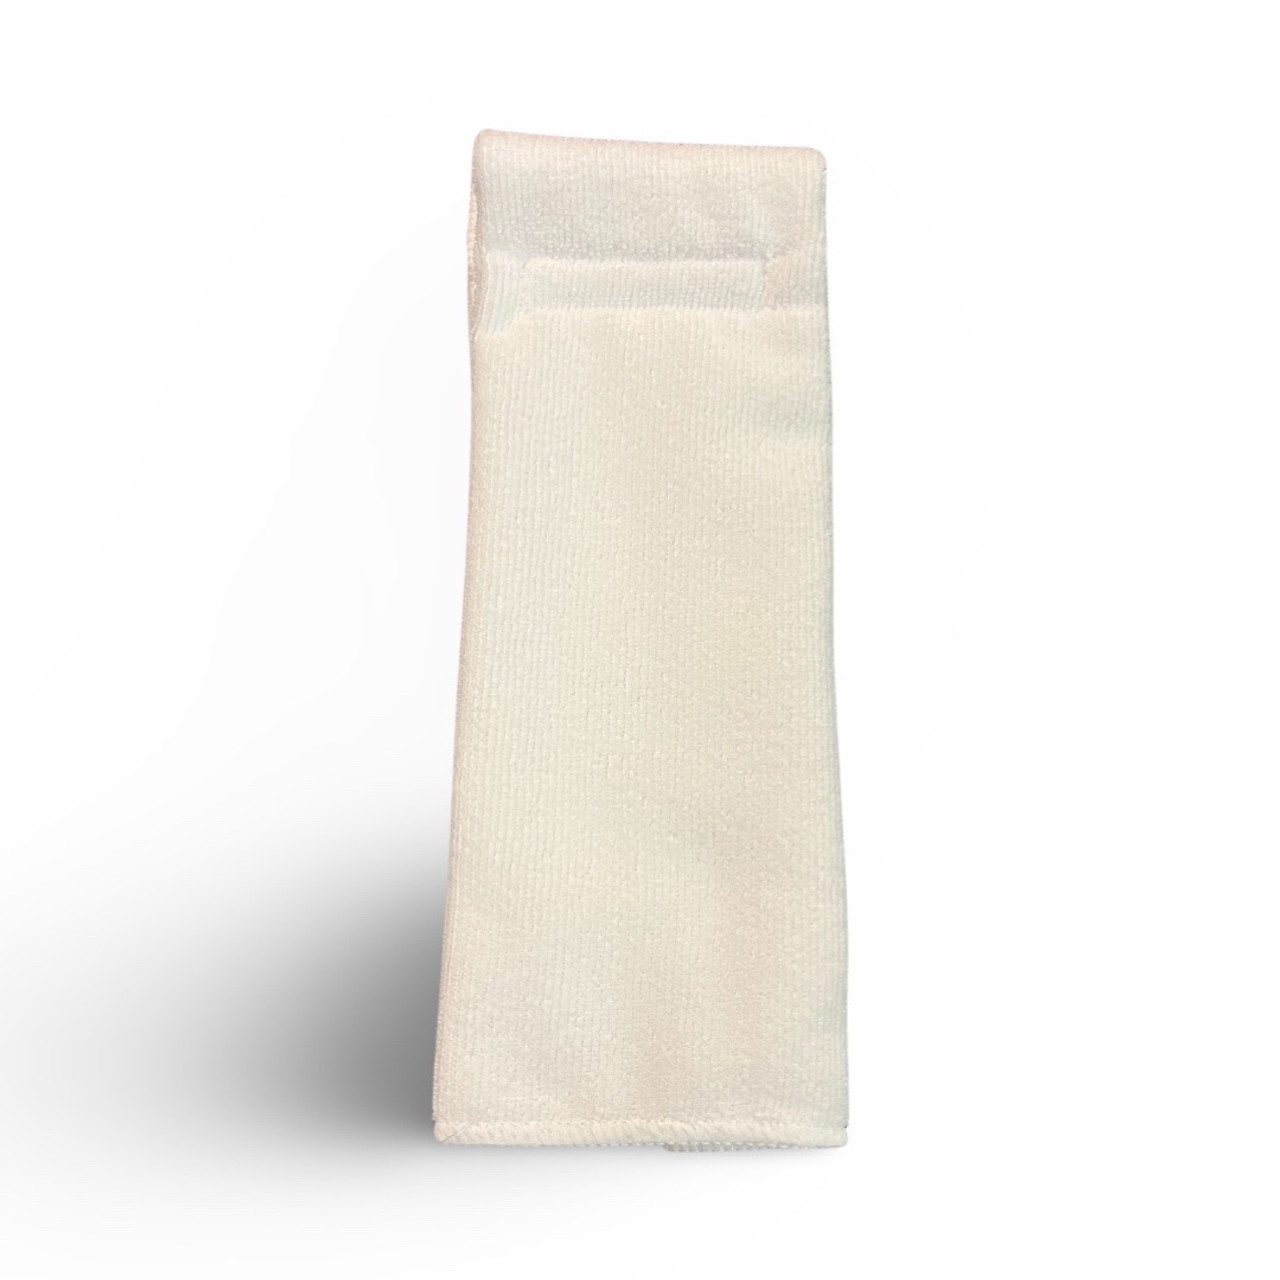 Velcro Football towel 2.1